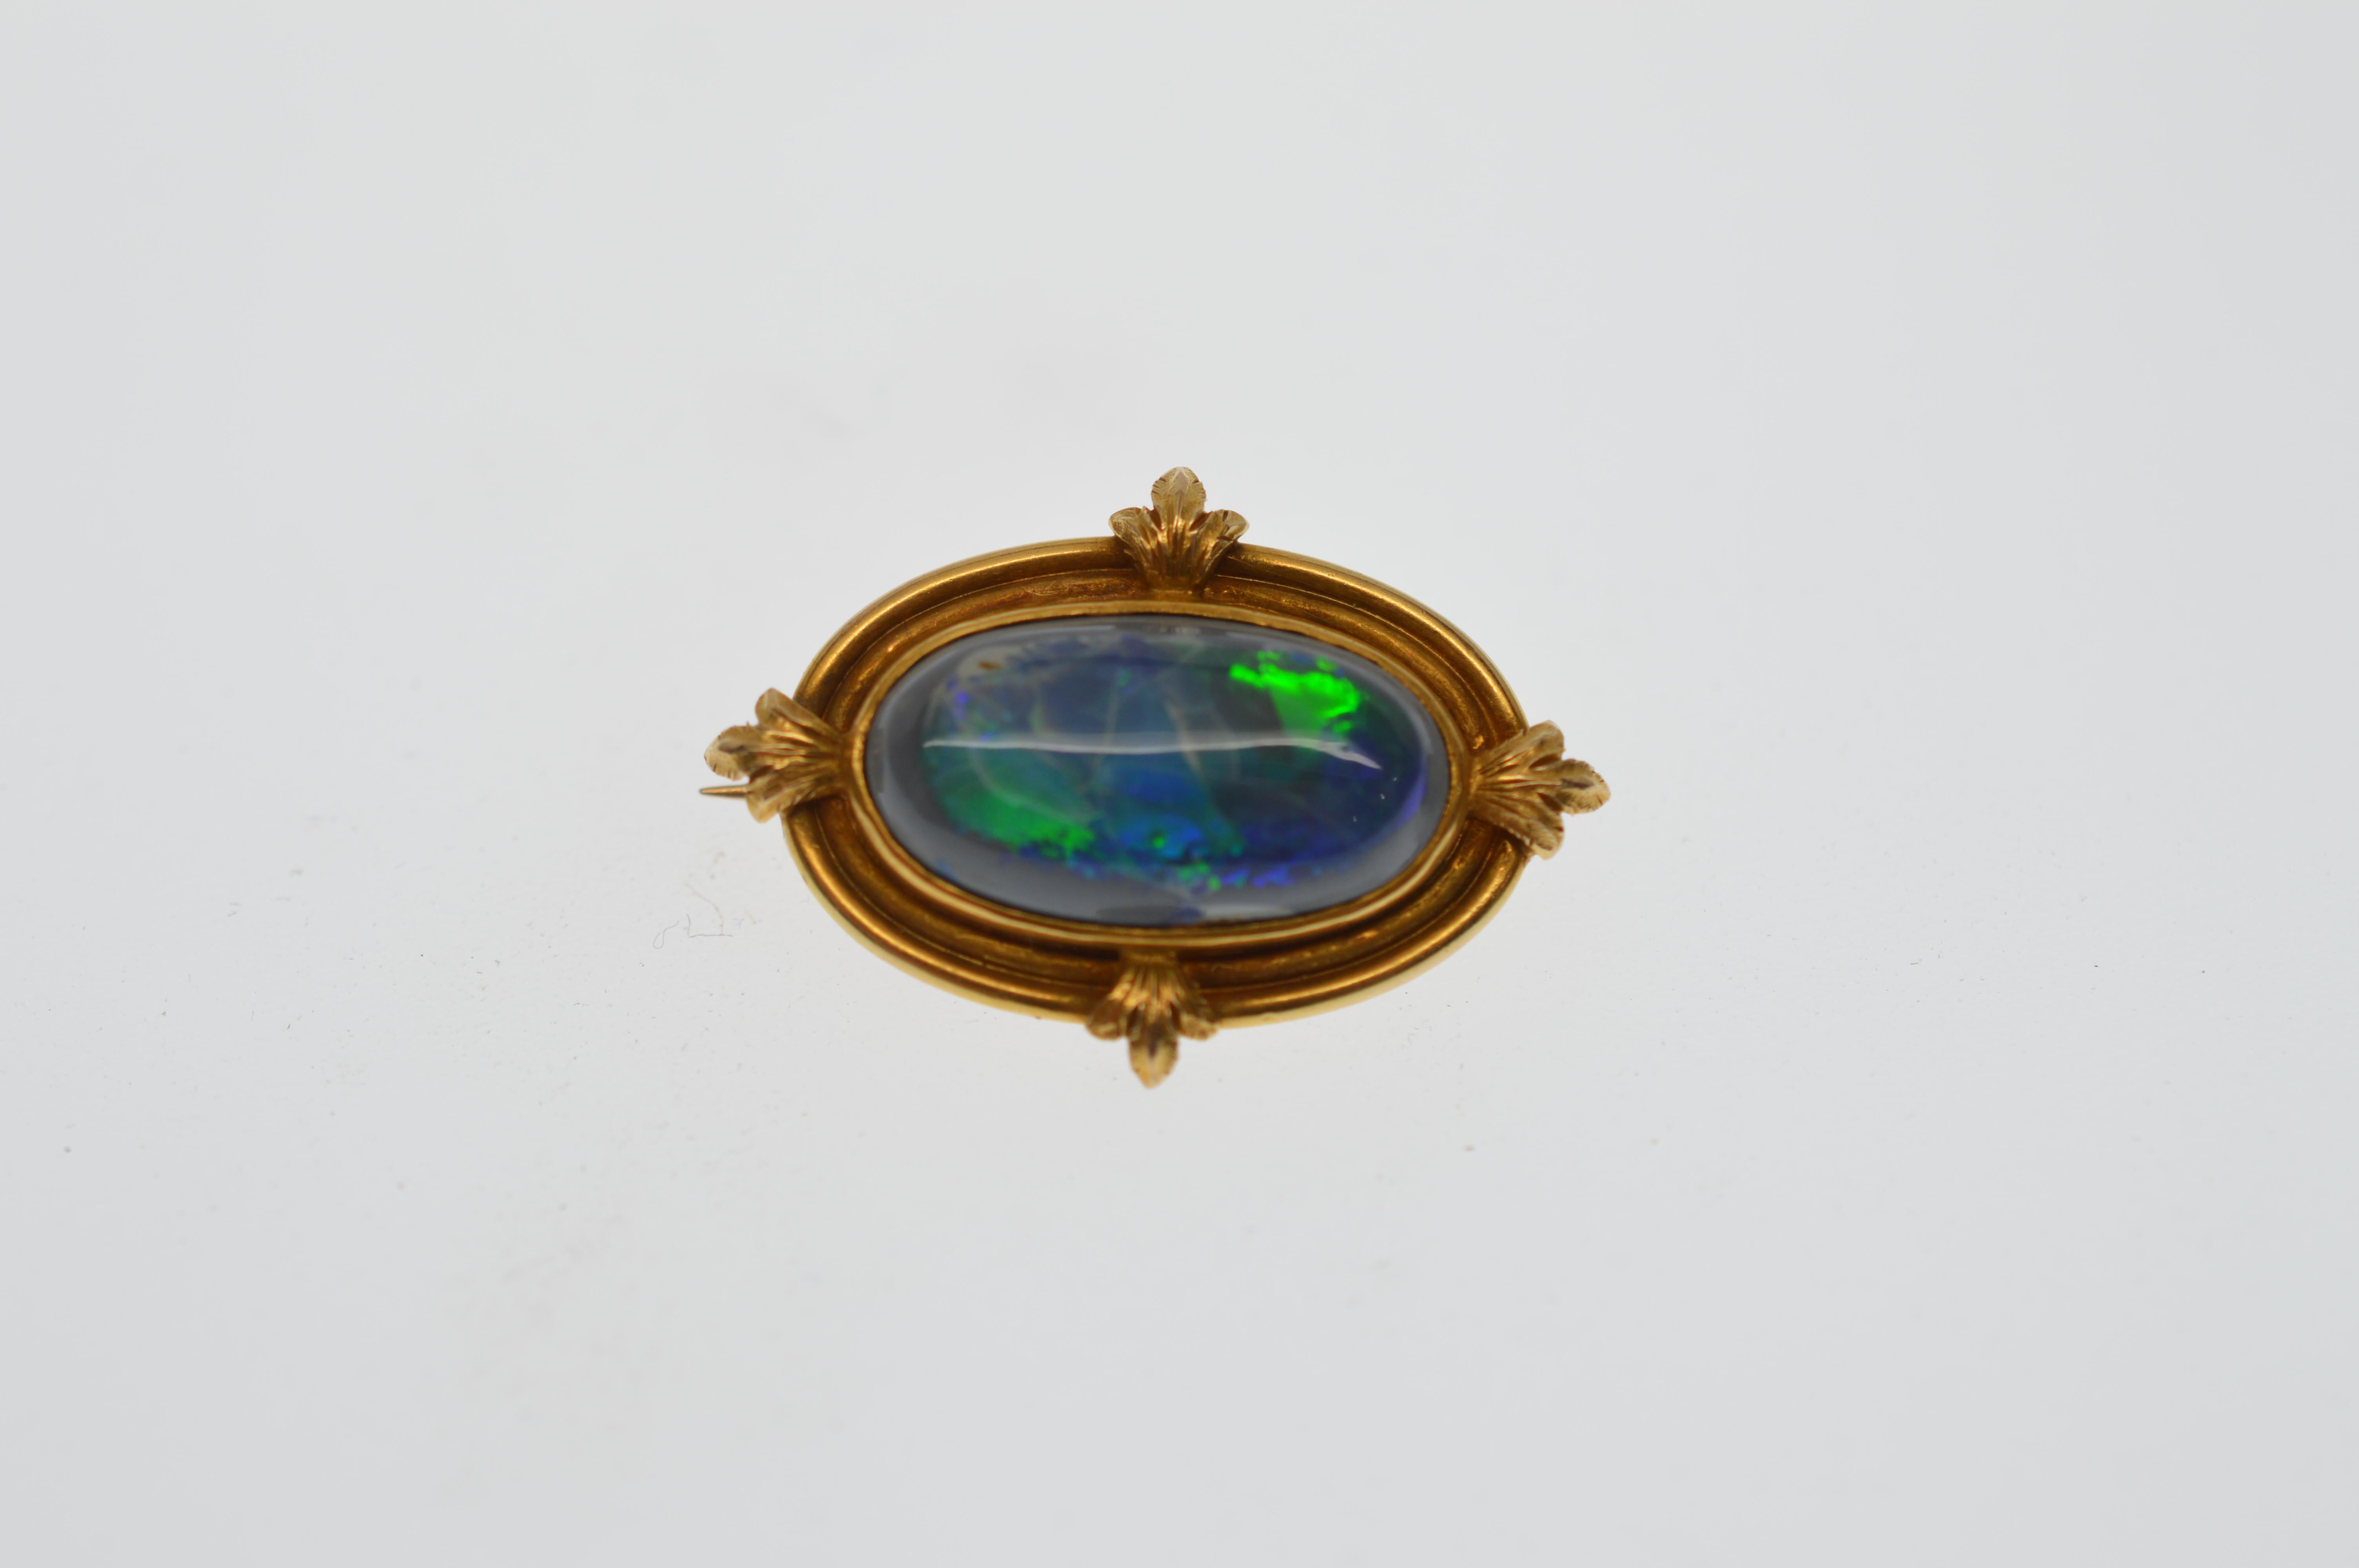 Antique 14K Gold & Opal Doublet Pin Brooch. Measures 1-1/8